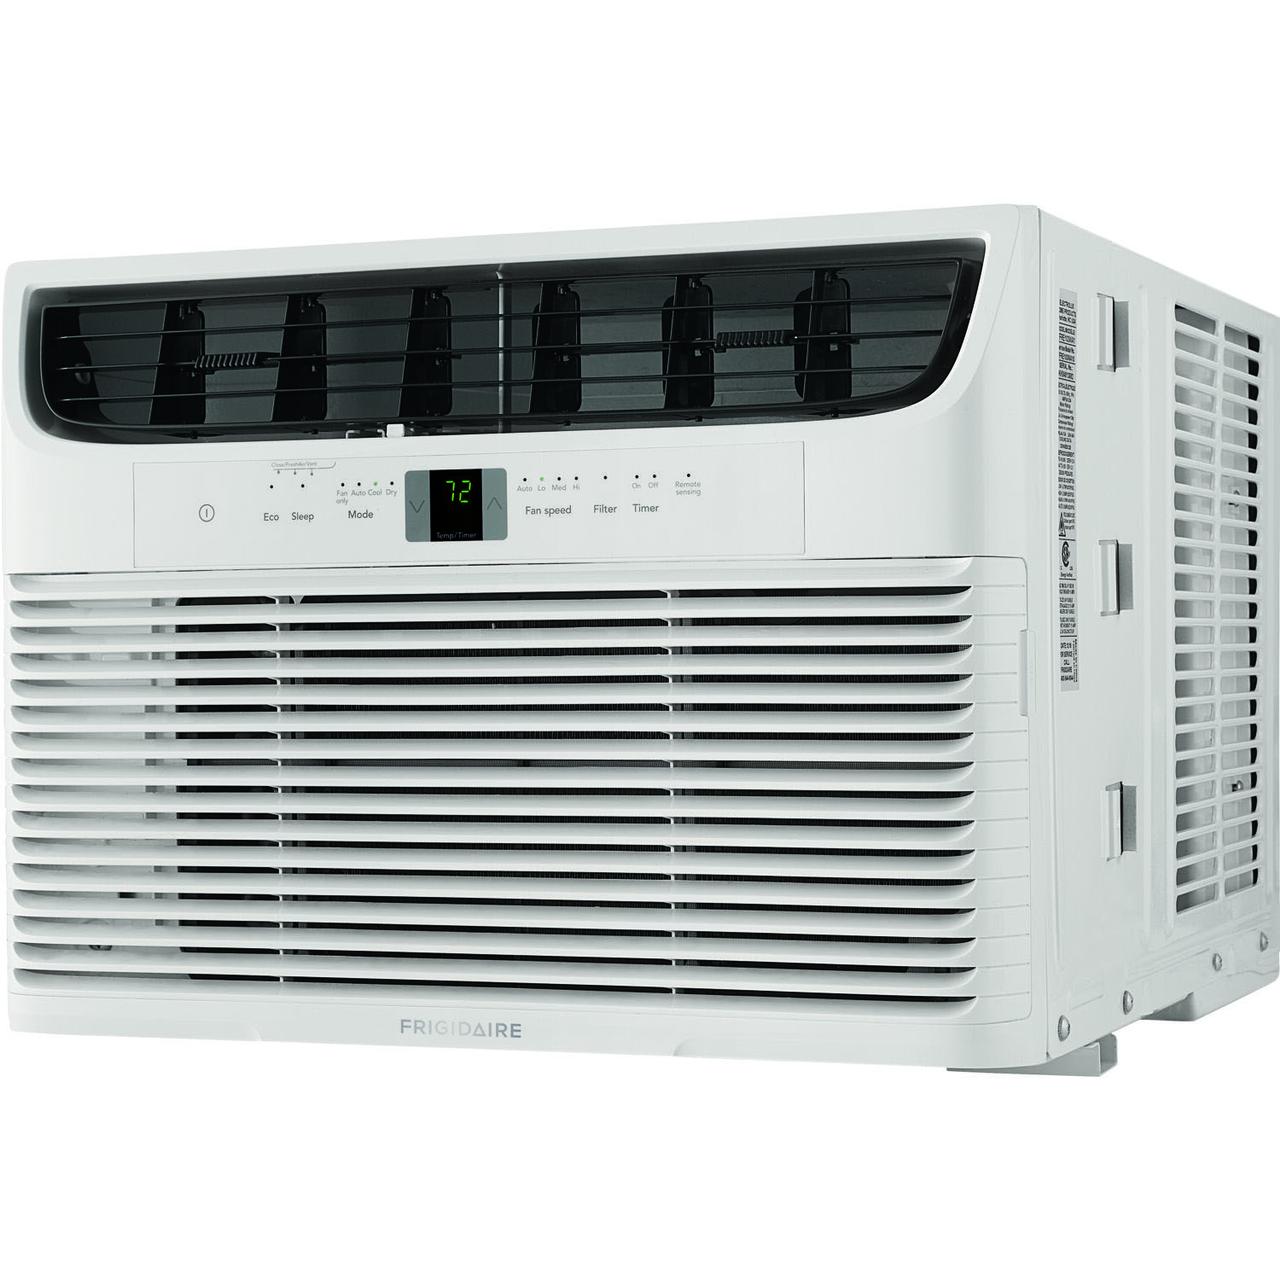 Frigidaire 15,100 BTU Window Air Conditioner with Remote in White - image 1 of 7